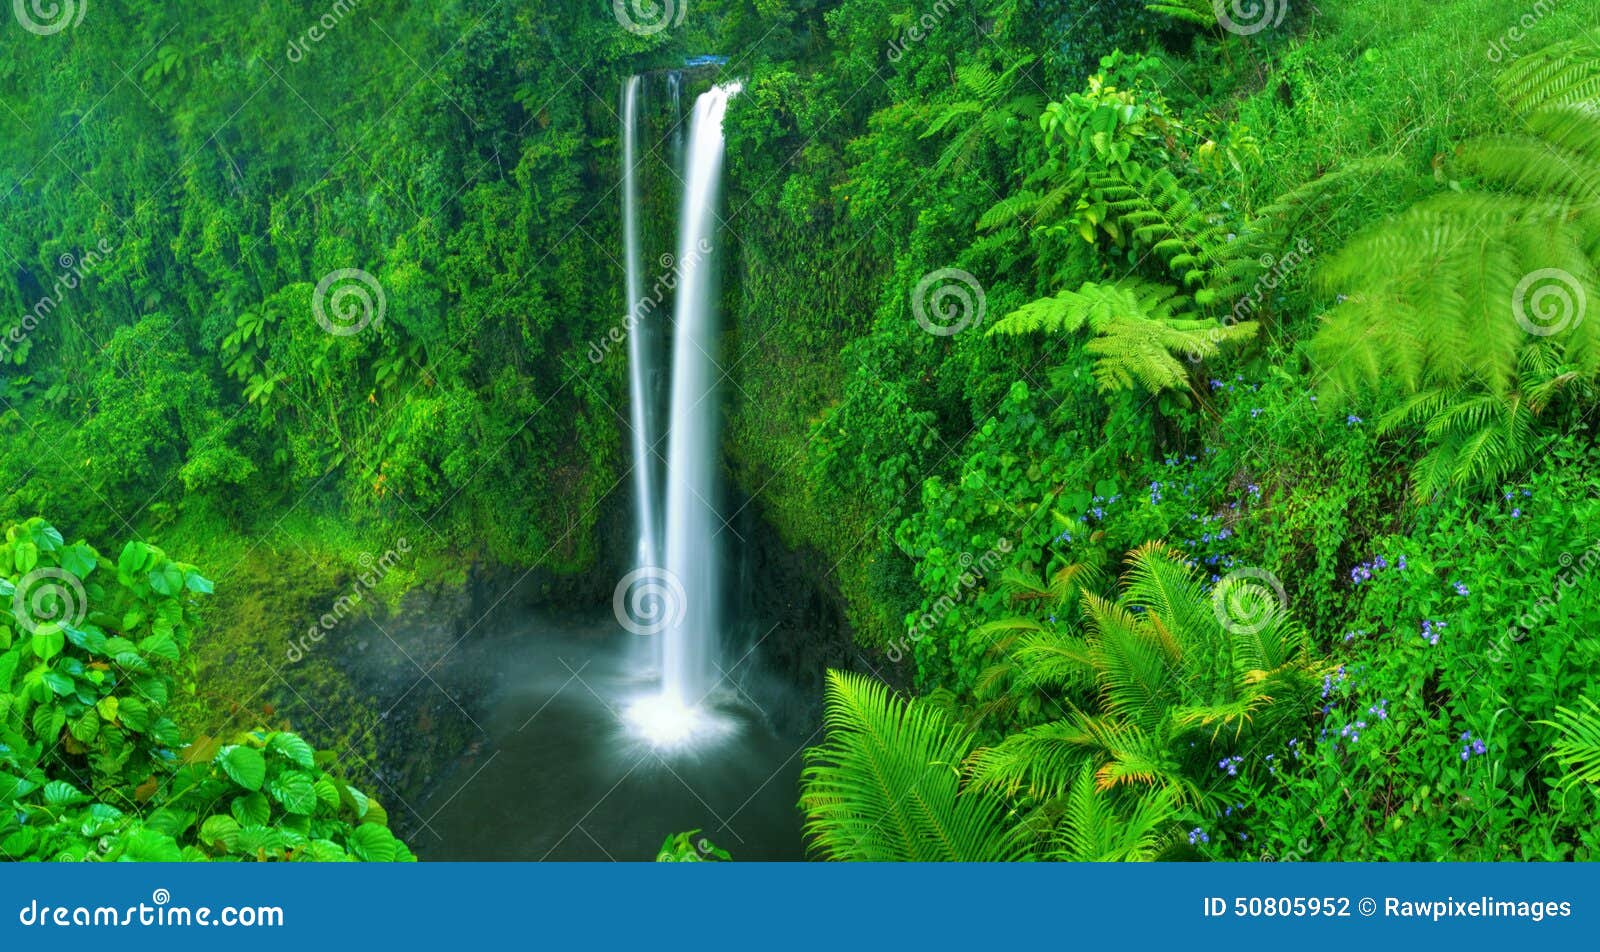 waterfall nature fresh green moisture concept